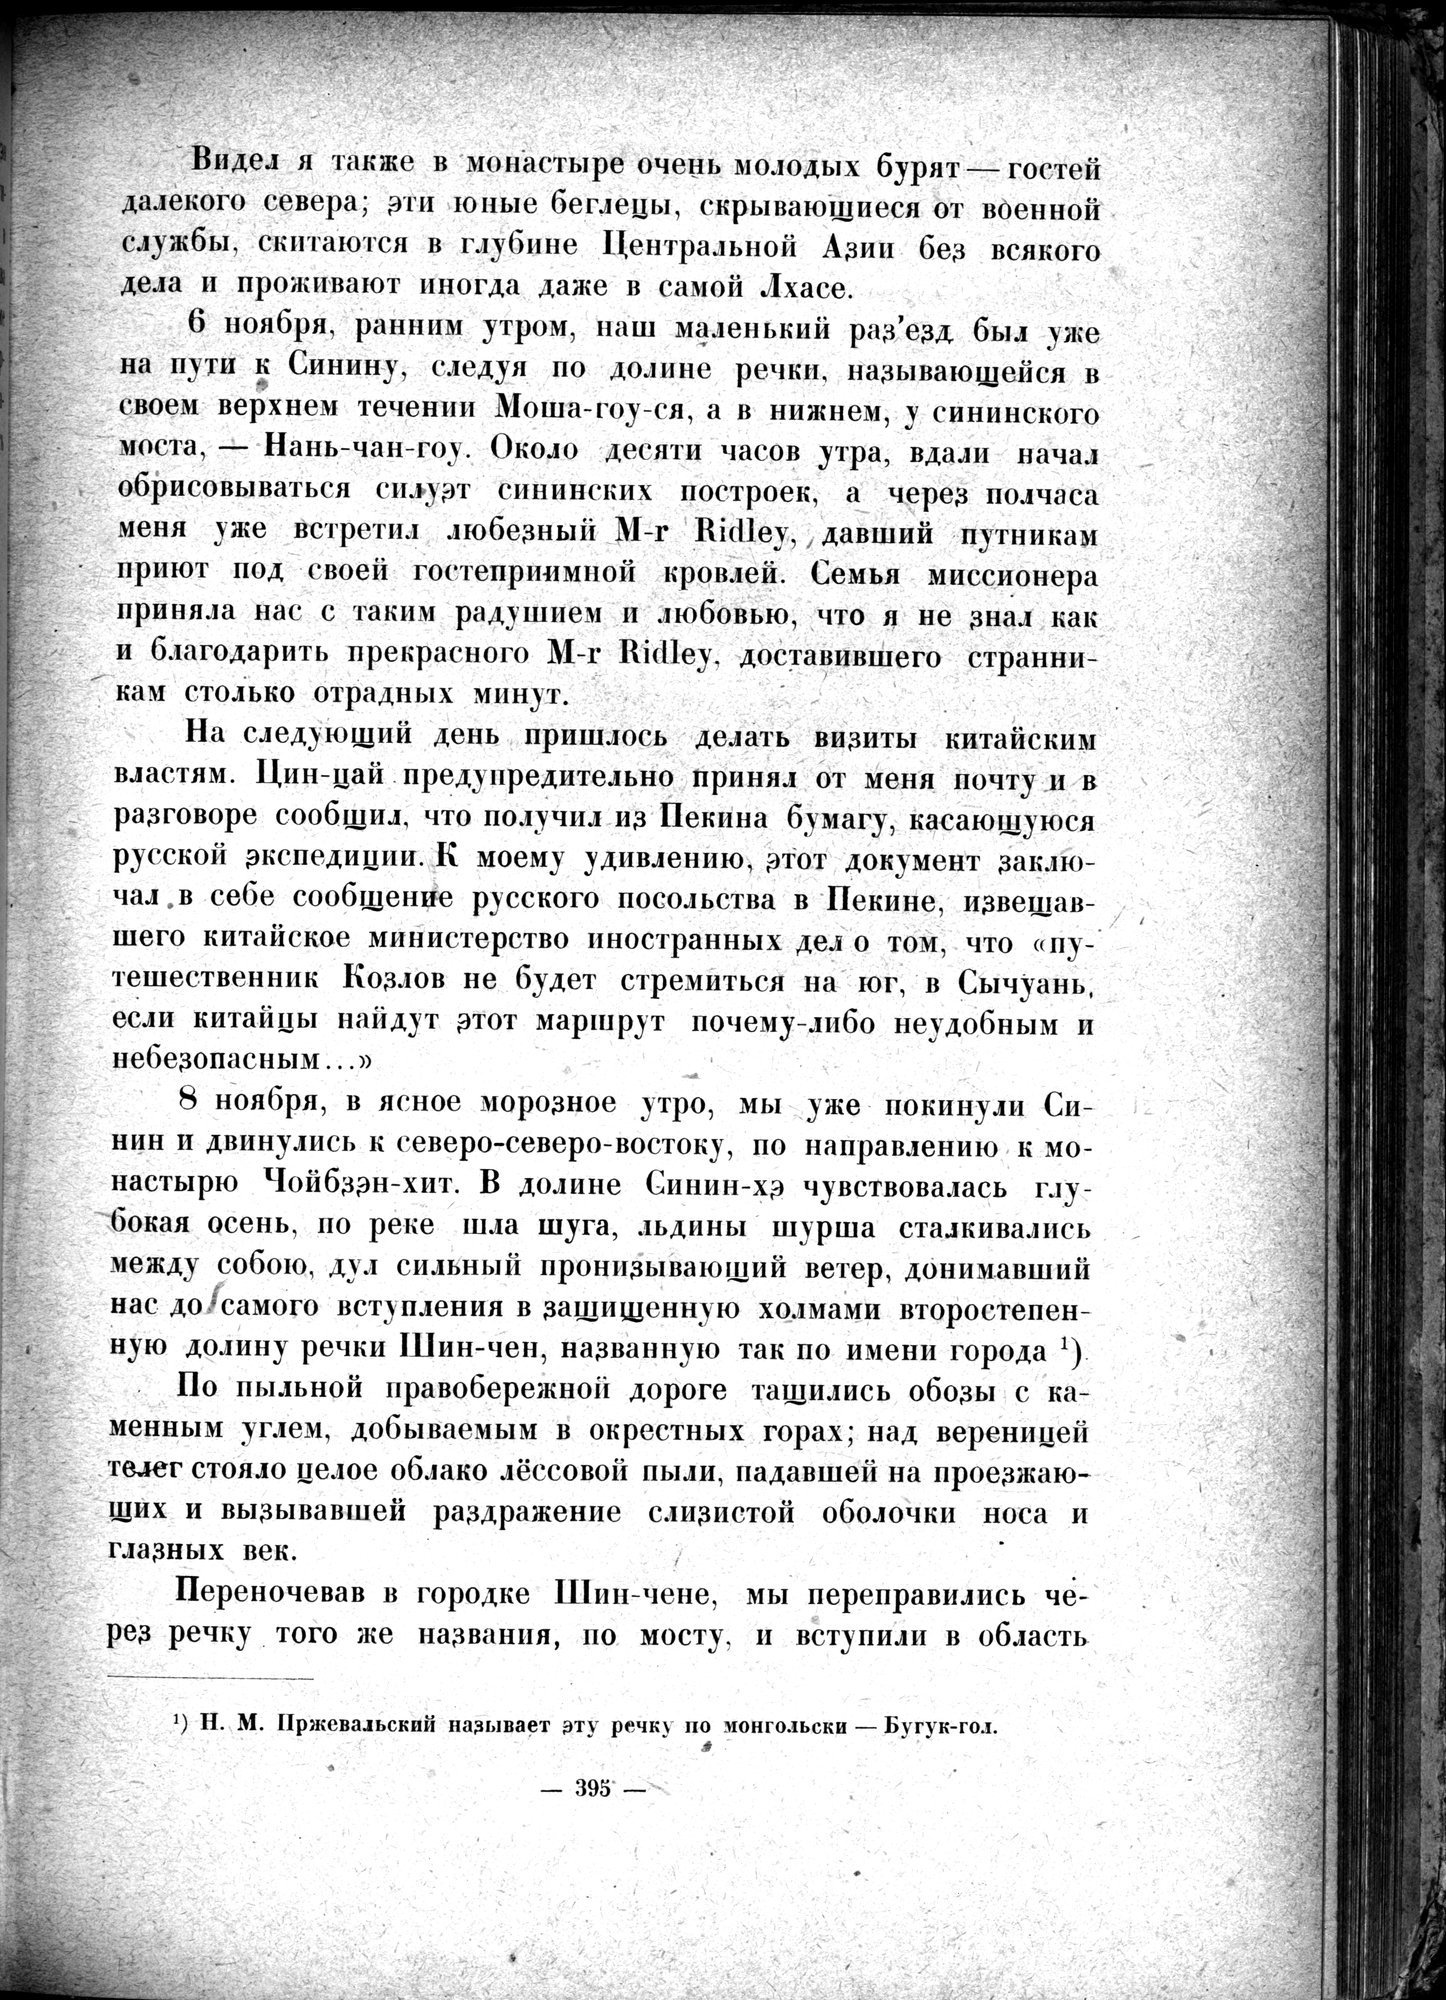 Mongoliya i Amdo i mertby gorod Khara-Khoto : vol.1 / Page 449 (Grayscale High Resolution Image)